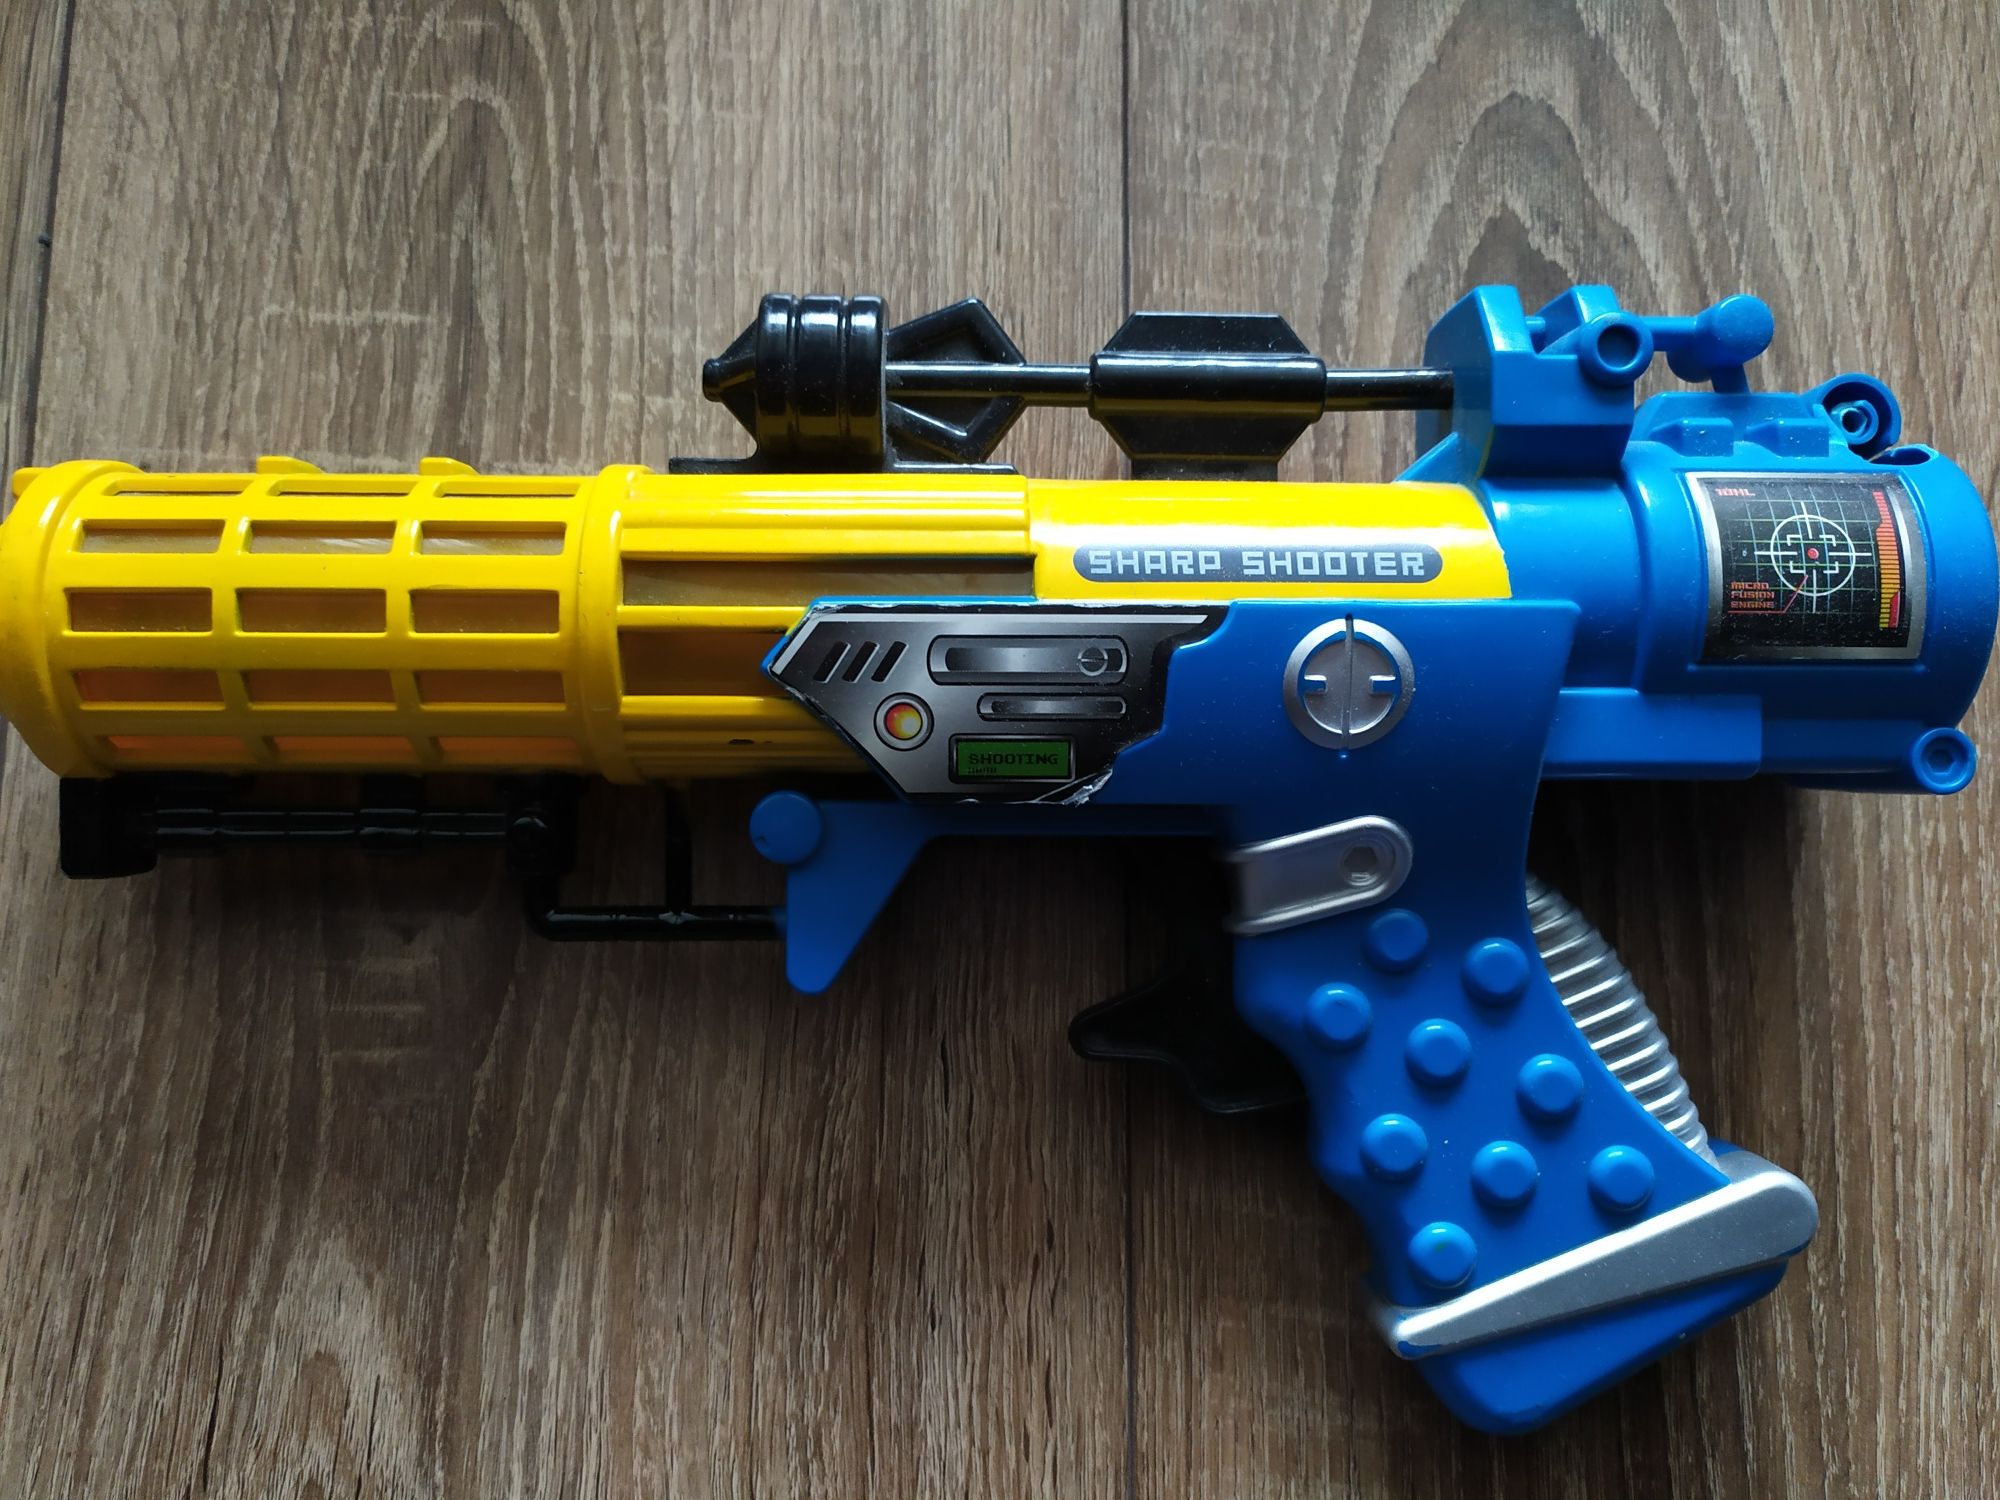 Pistolet plastikowy Flash Gun zabawka 3+ błyska strzela